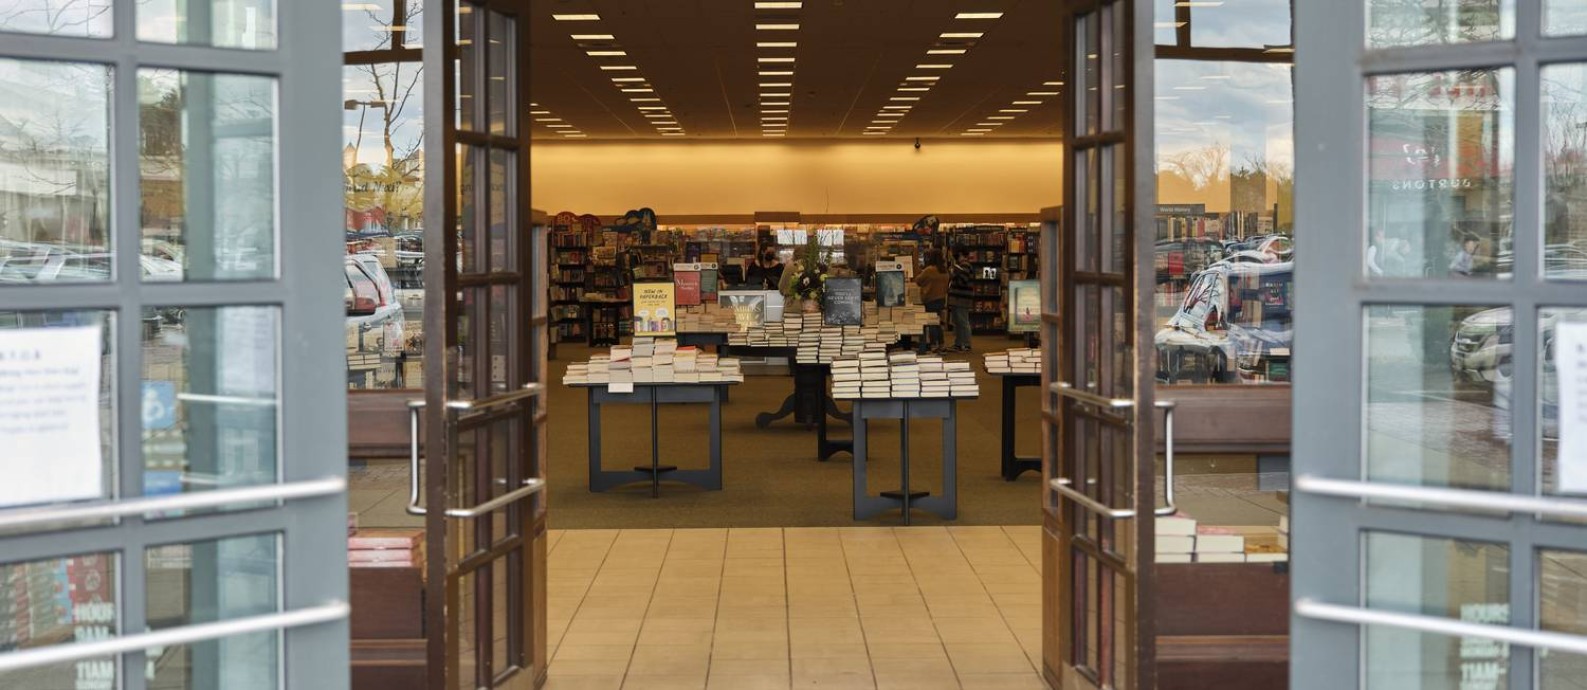 Loja da Barnes and Nobles em Hingham, Massachusetts Foto: CODY O'LOUGLIN / NYT